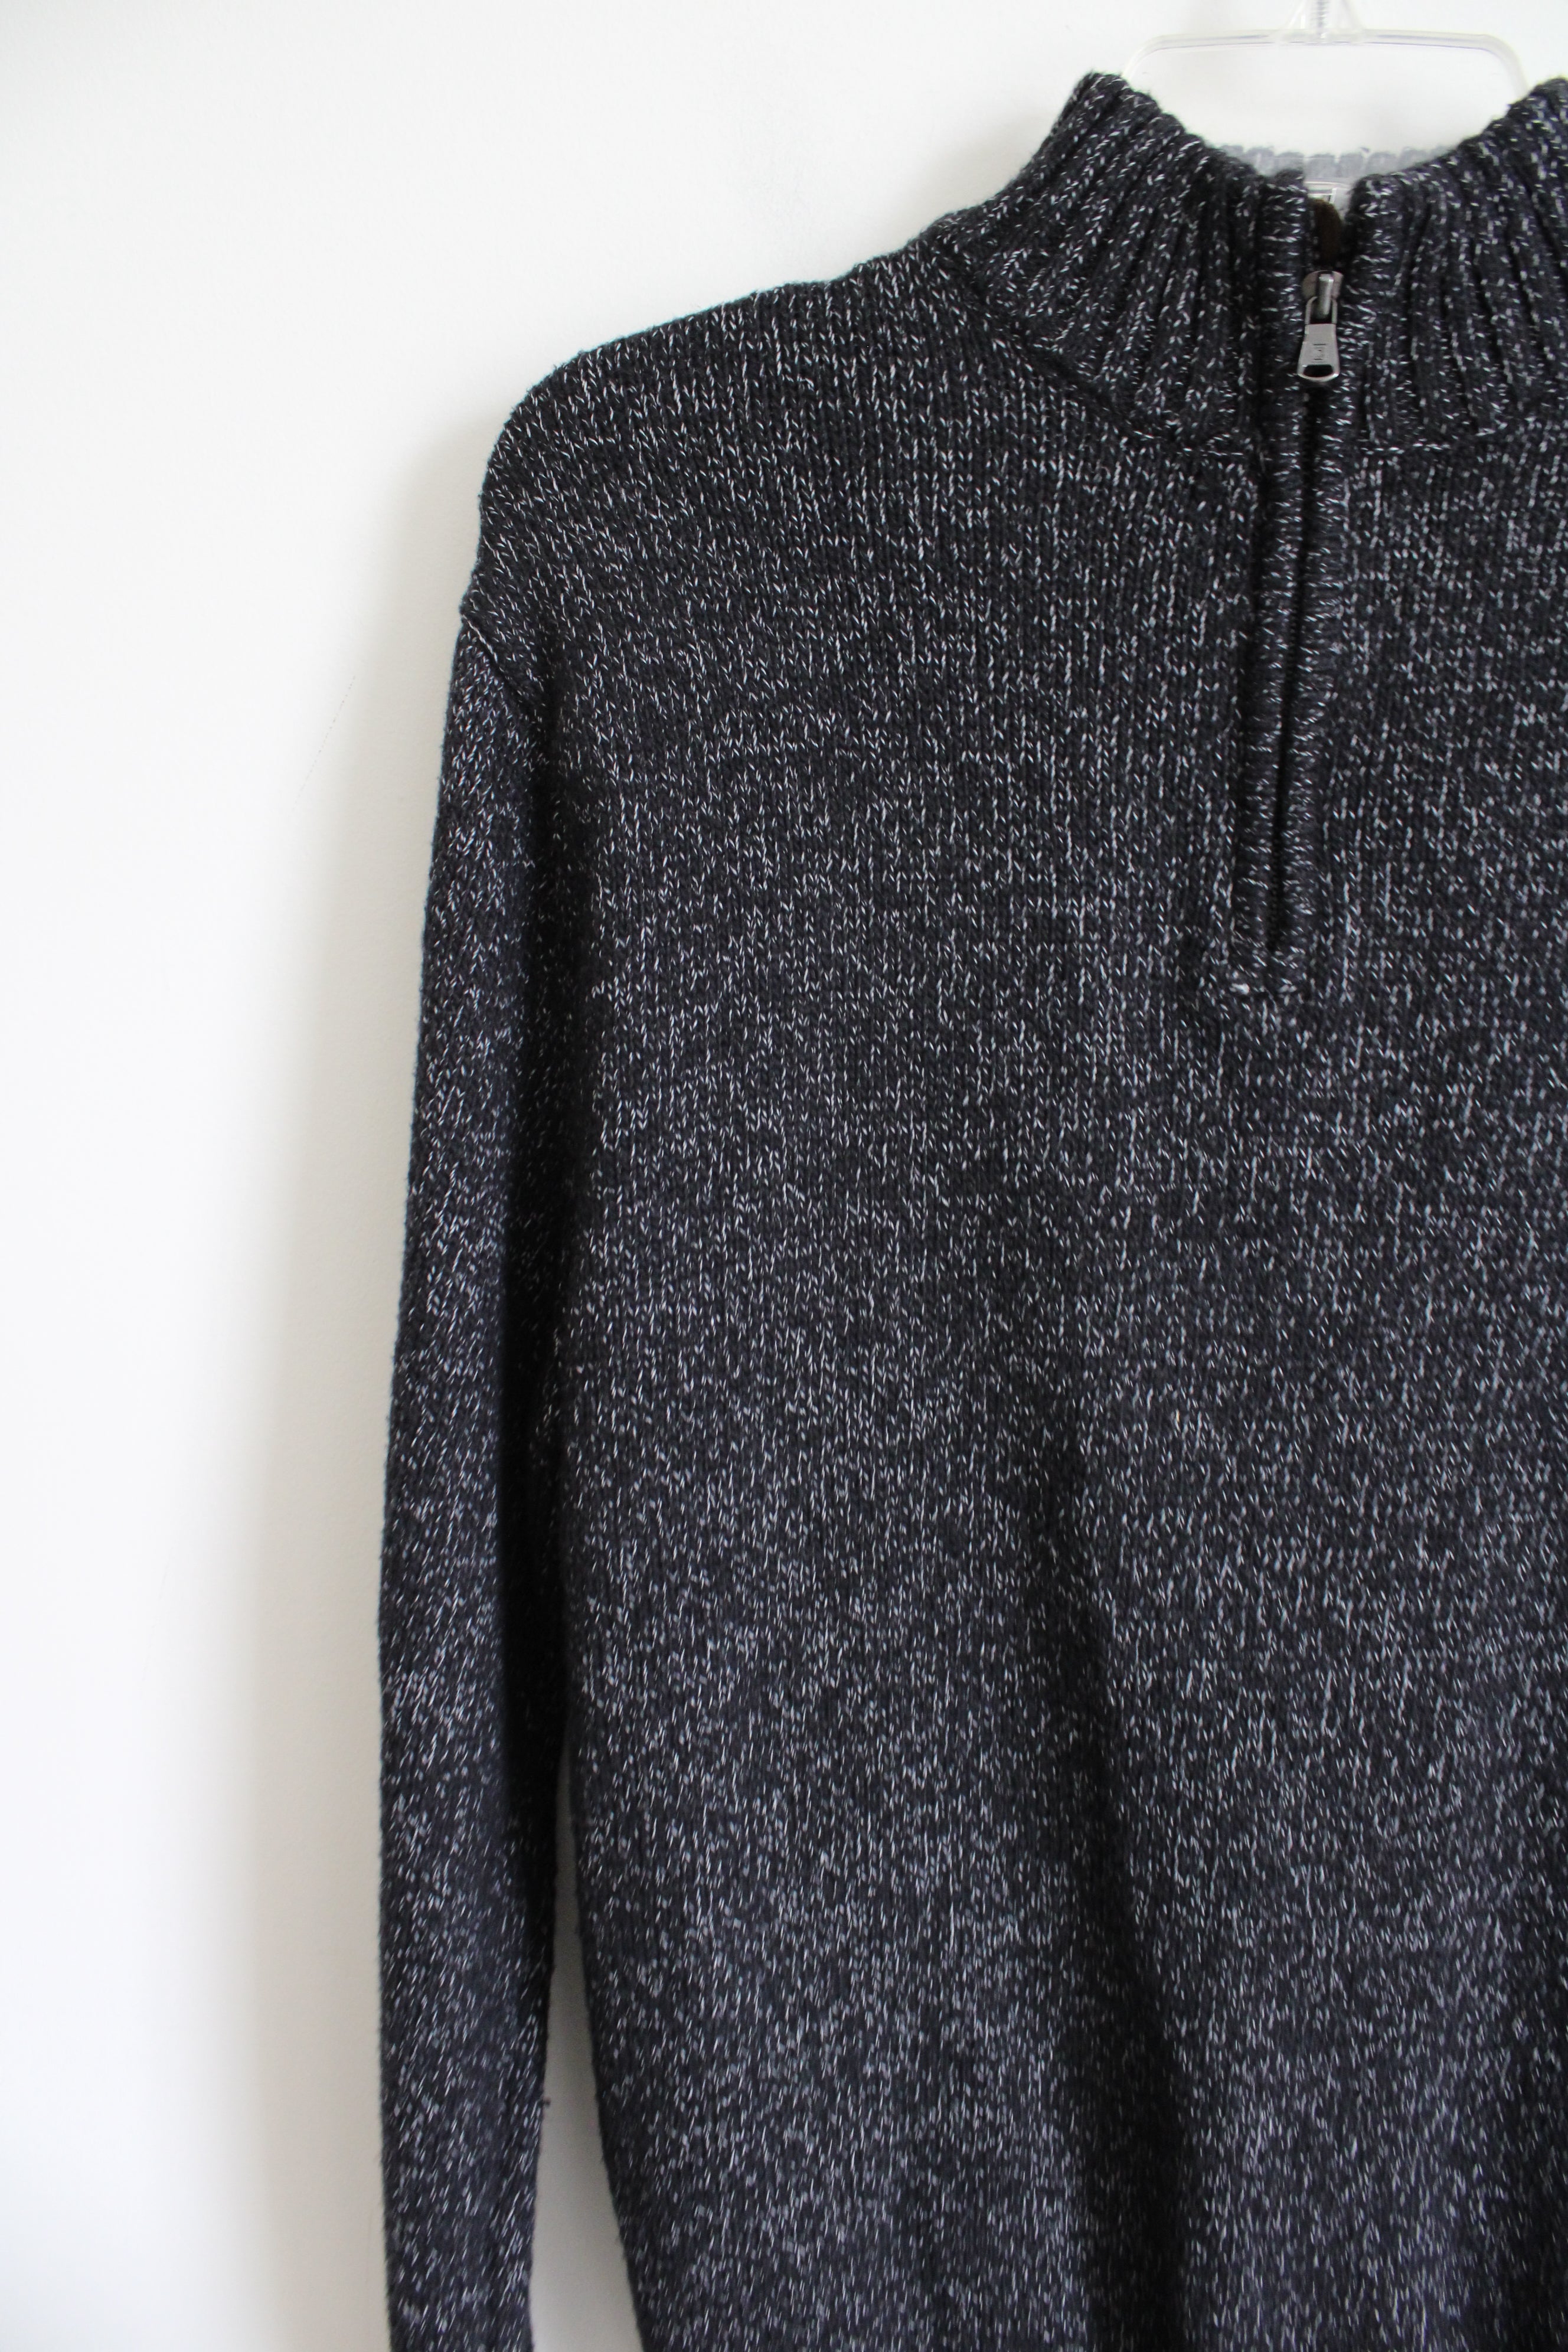 Chaps Black Speckled Knit 1/4 Zip Sweater | XL